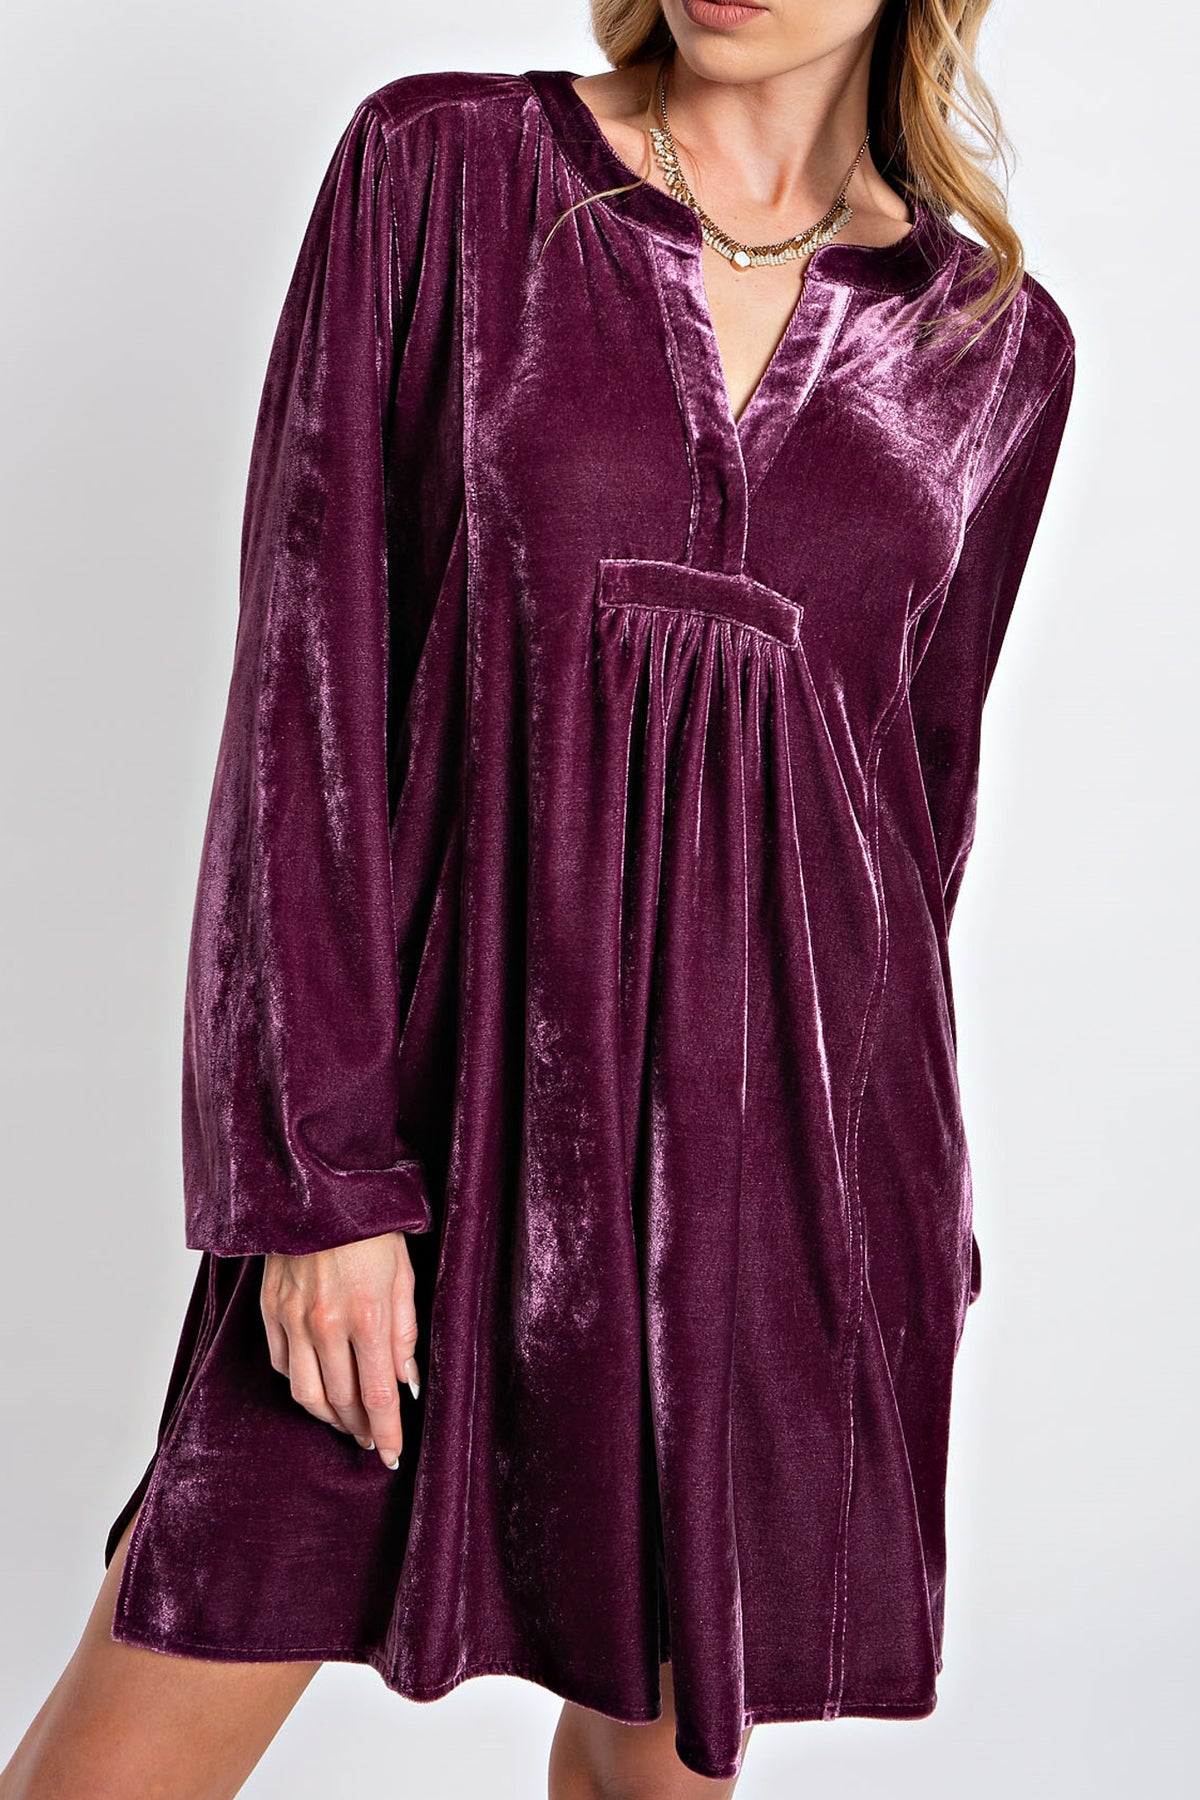 Fashion Women Solid Zipper V-Neck Slim Suede Dress Long Sleeve Velvet Dress  Purple XXXL - Walmart.com